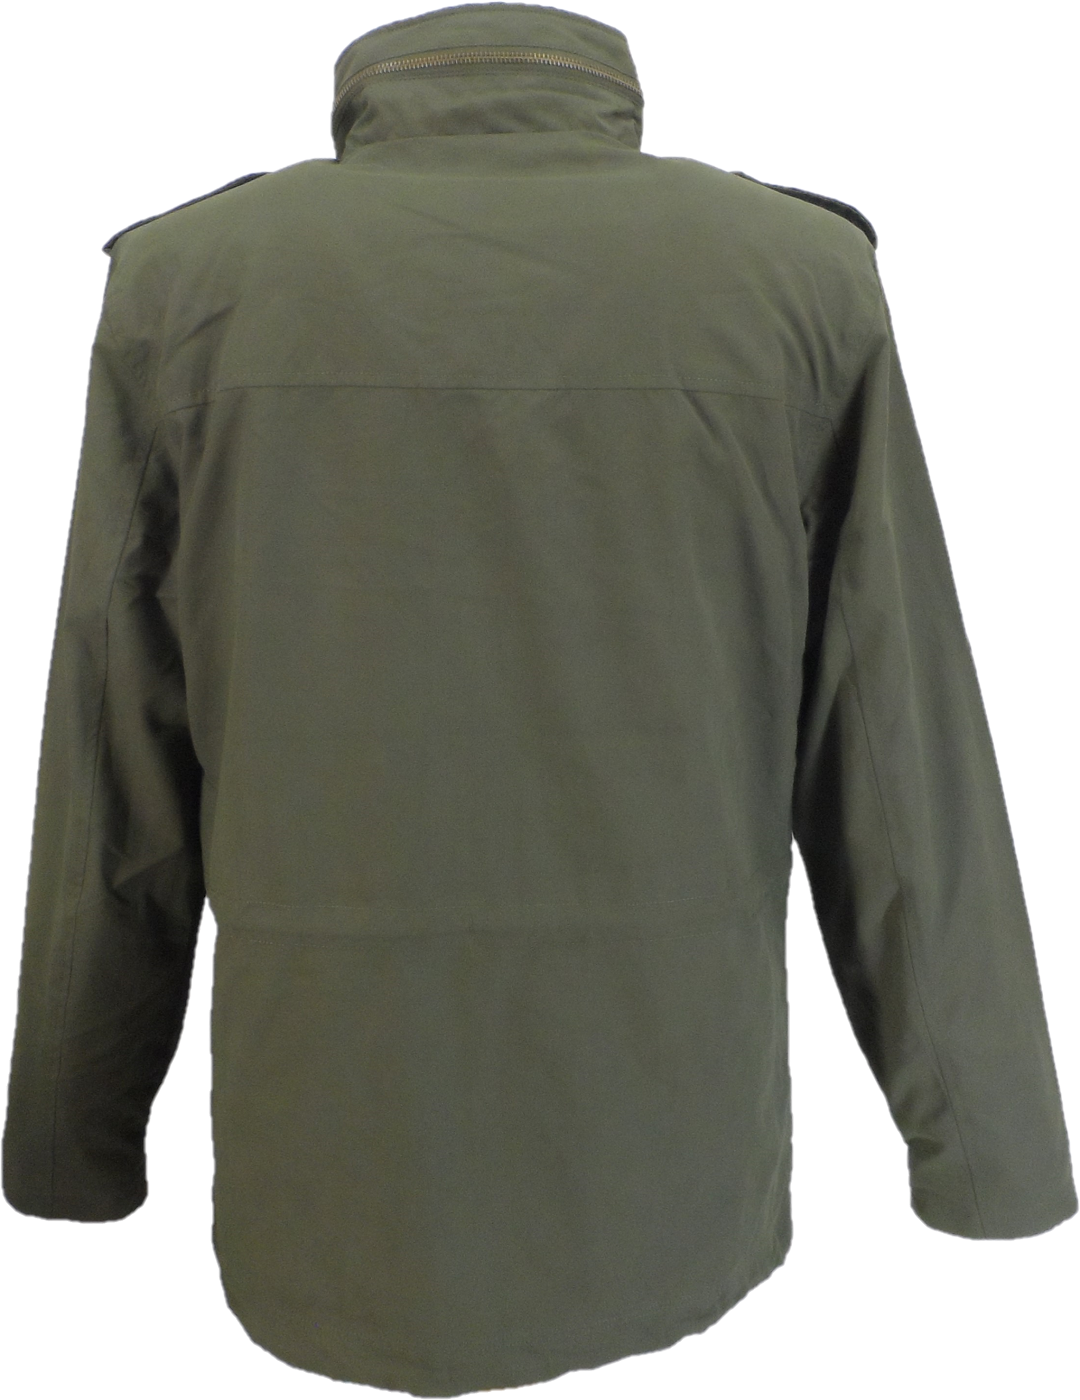 Lambretta Mens Retro M-65 Military Jacket